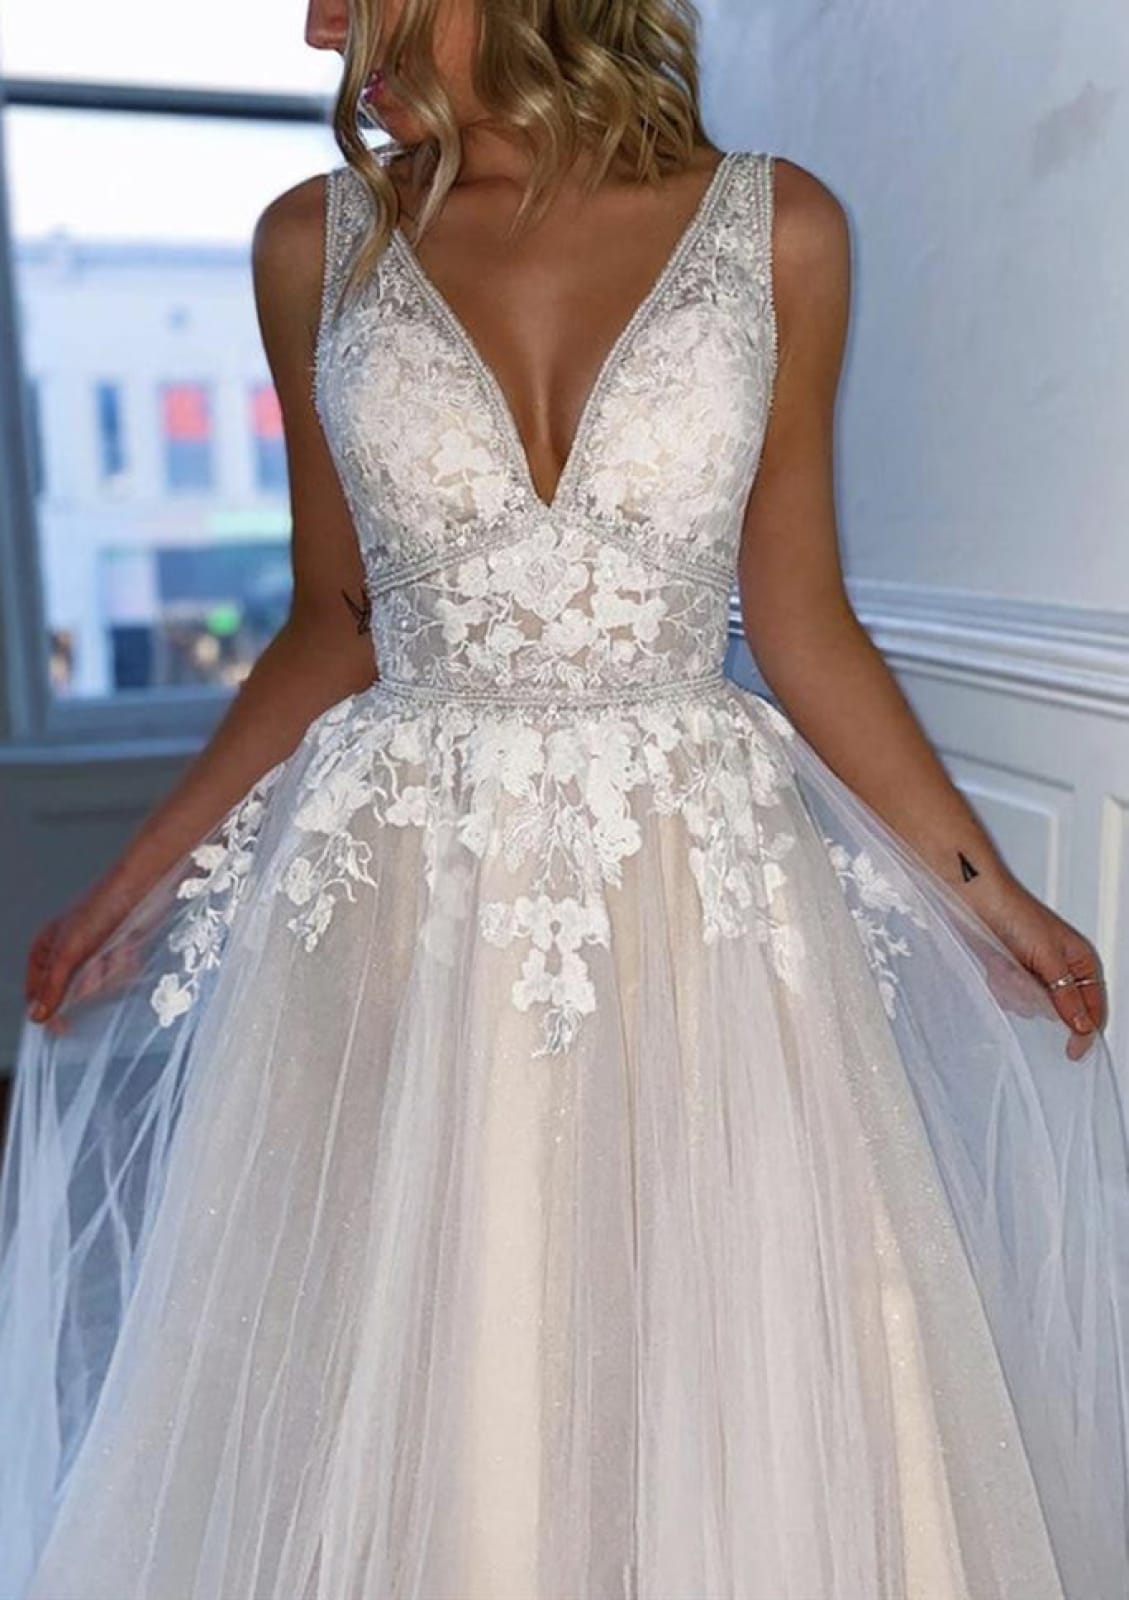 Princess V Neck Sleeveless Organza Lace Open Back Wedding Dress